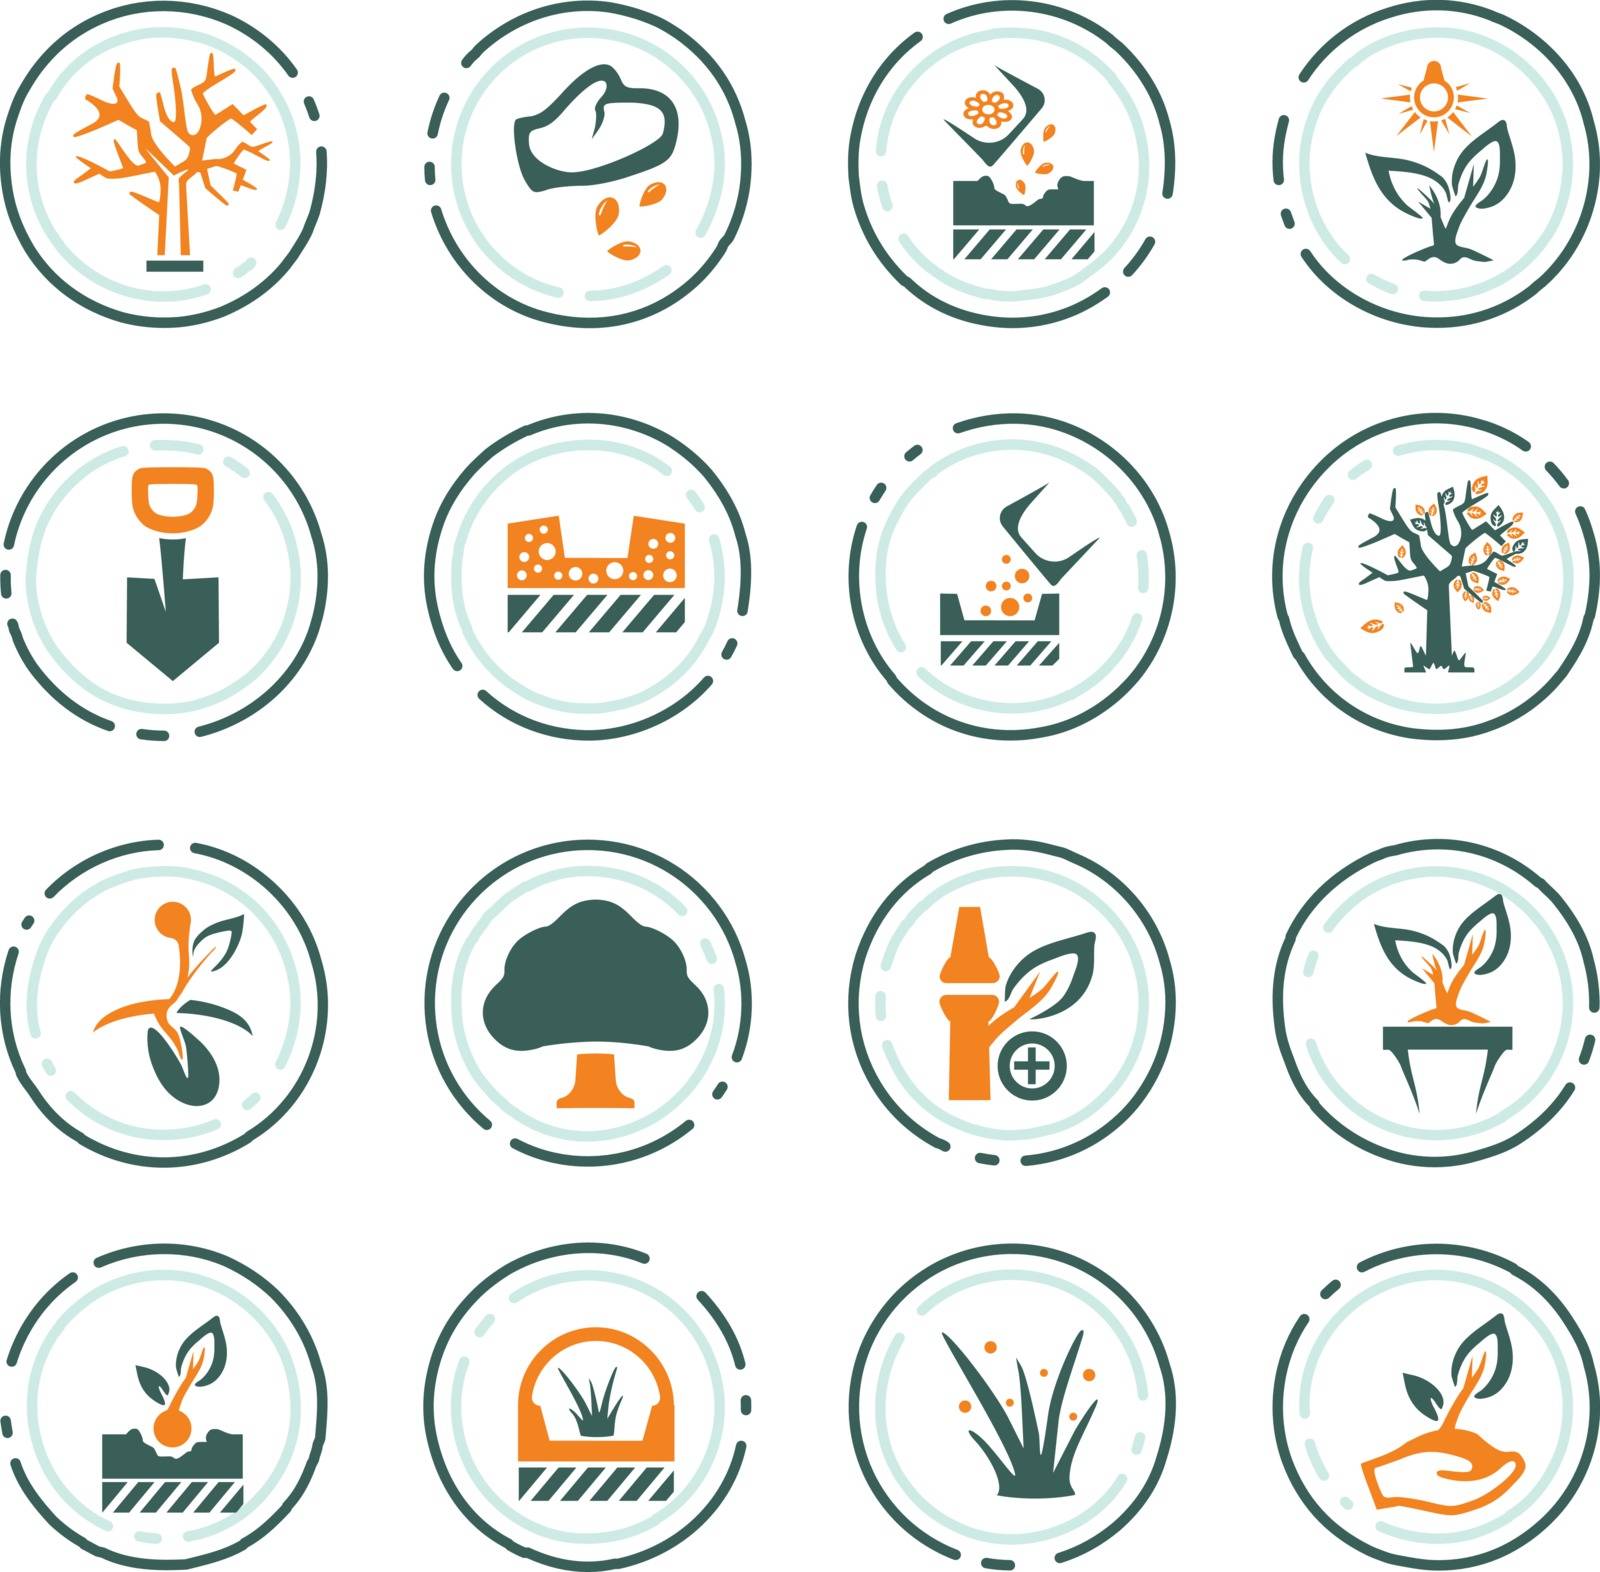 Gardening icons set by ayax